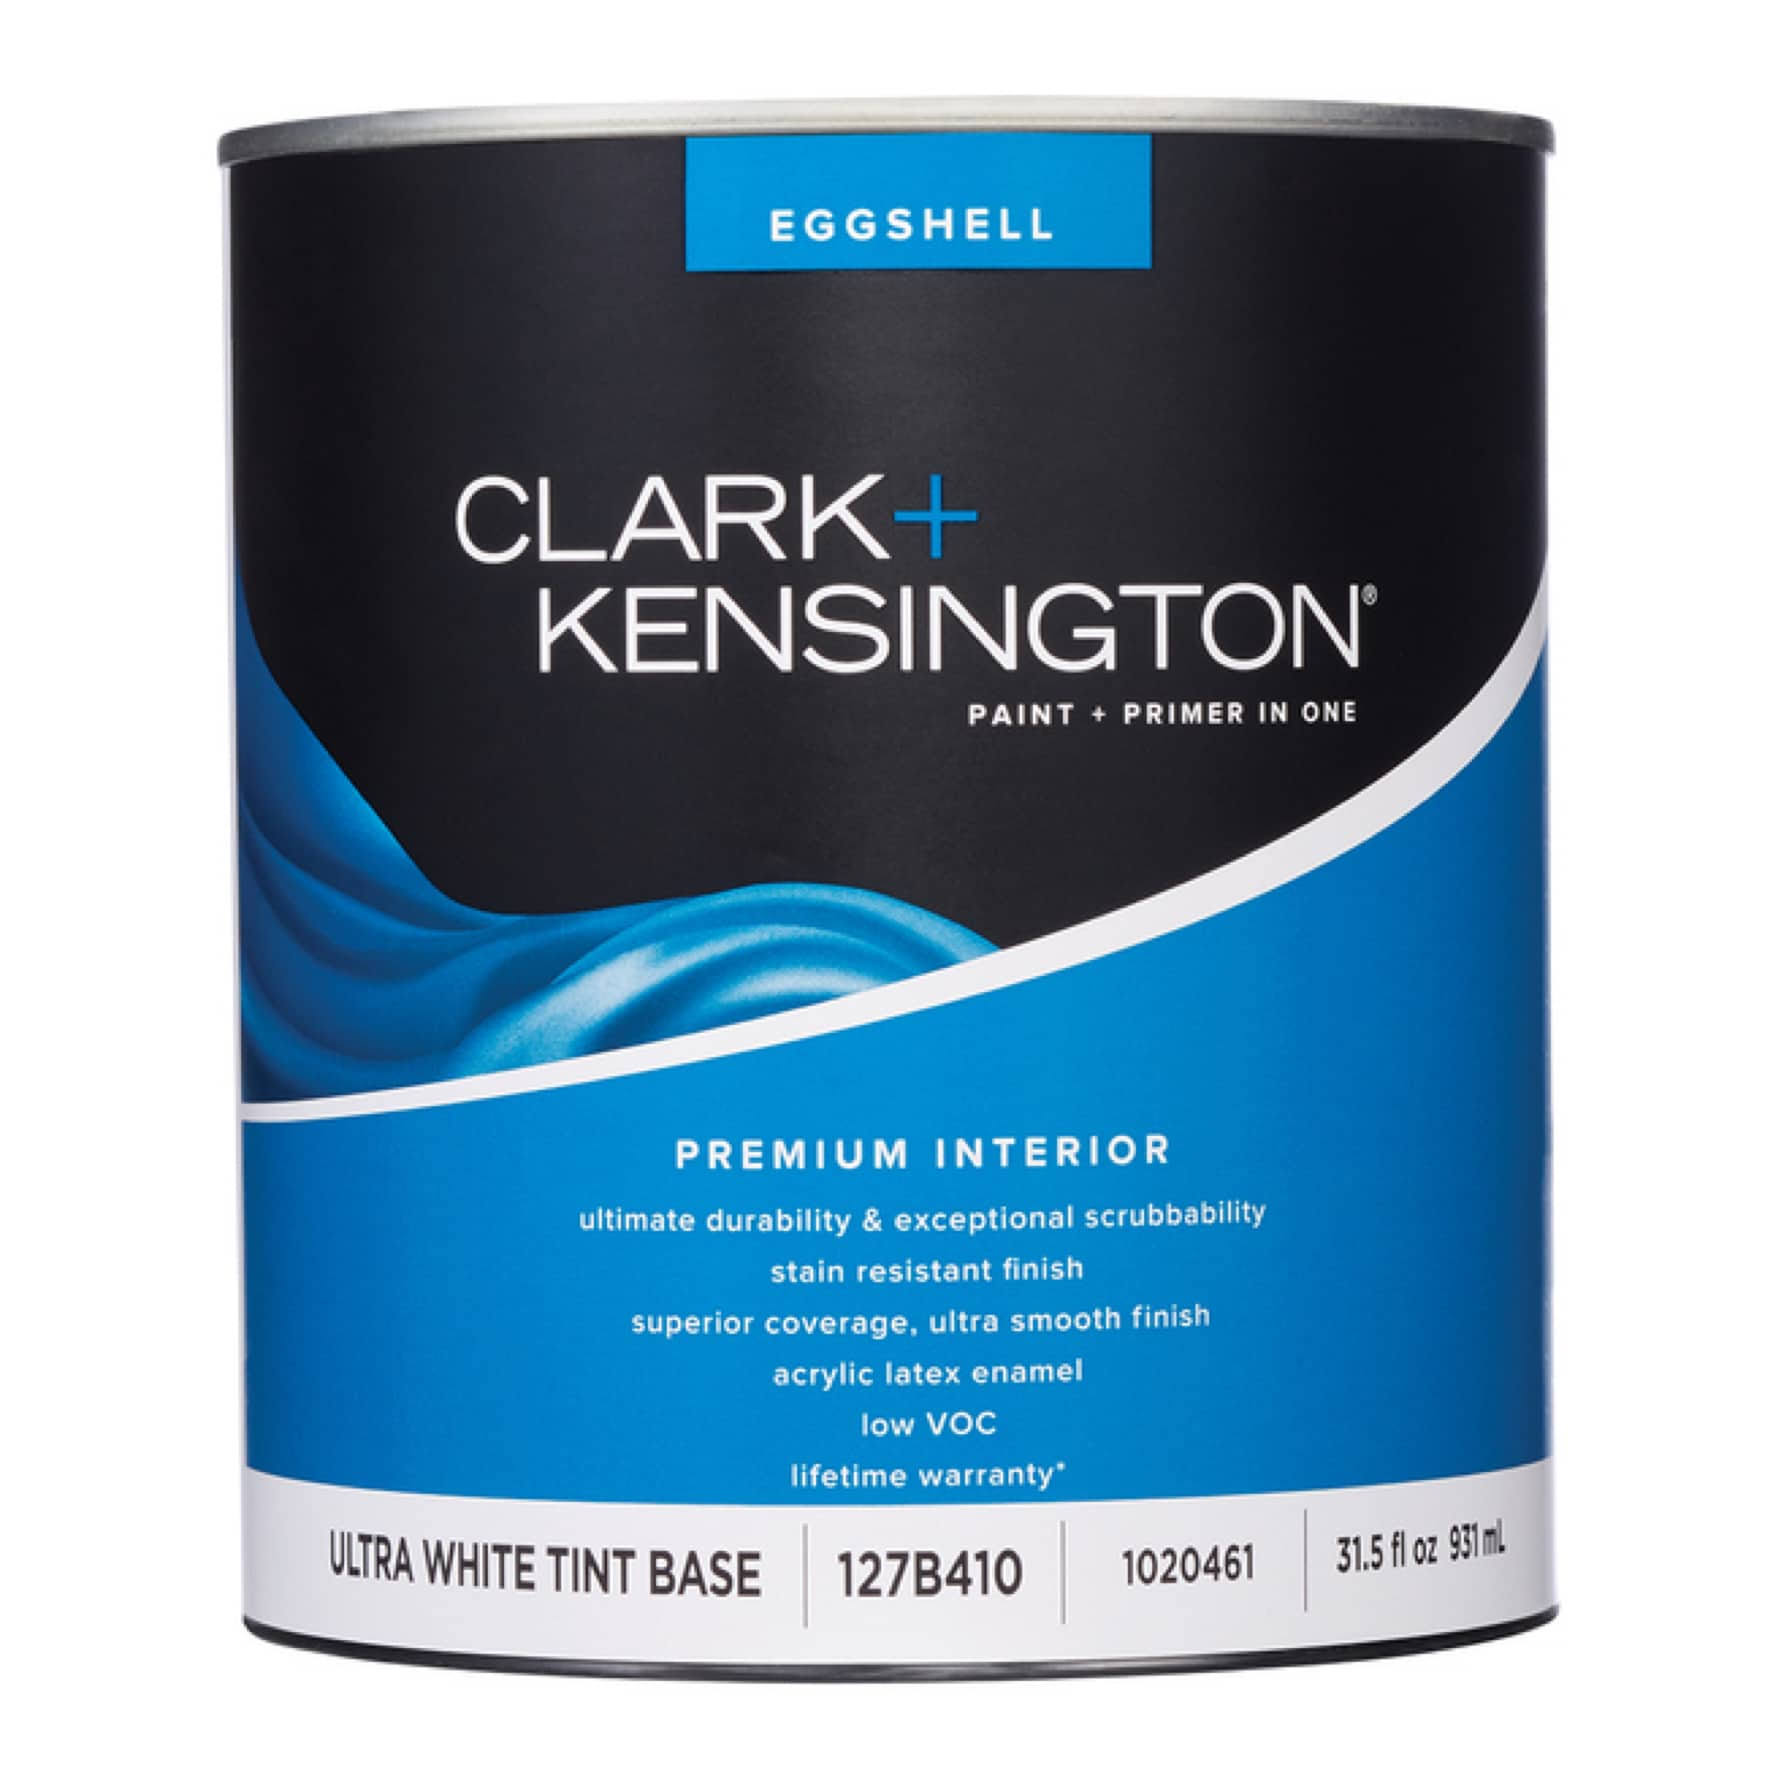 Clark+Kensington Eggshell Tint Base Ultra White Base Acrylic-Alkyd Premium Paint Interior 1 Q